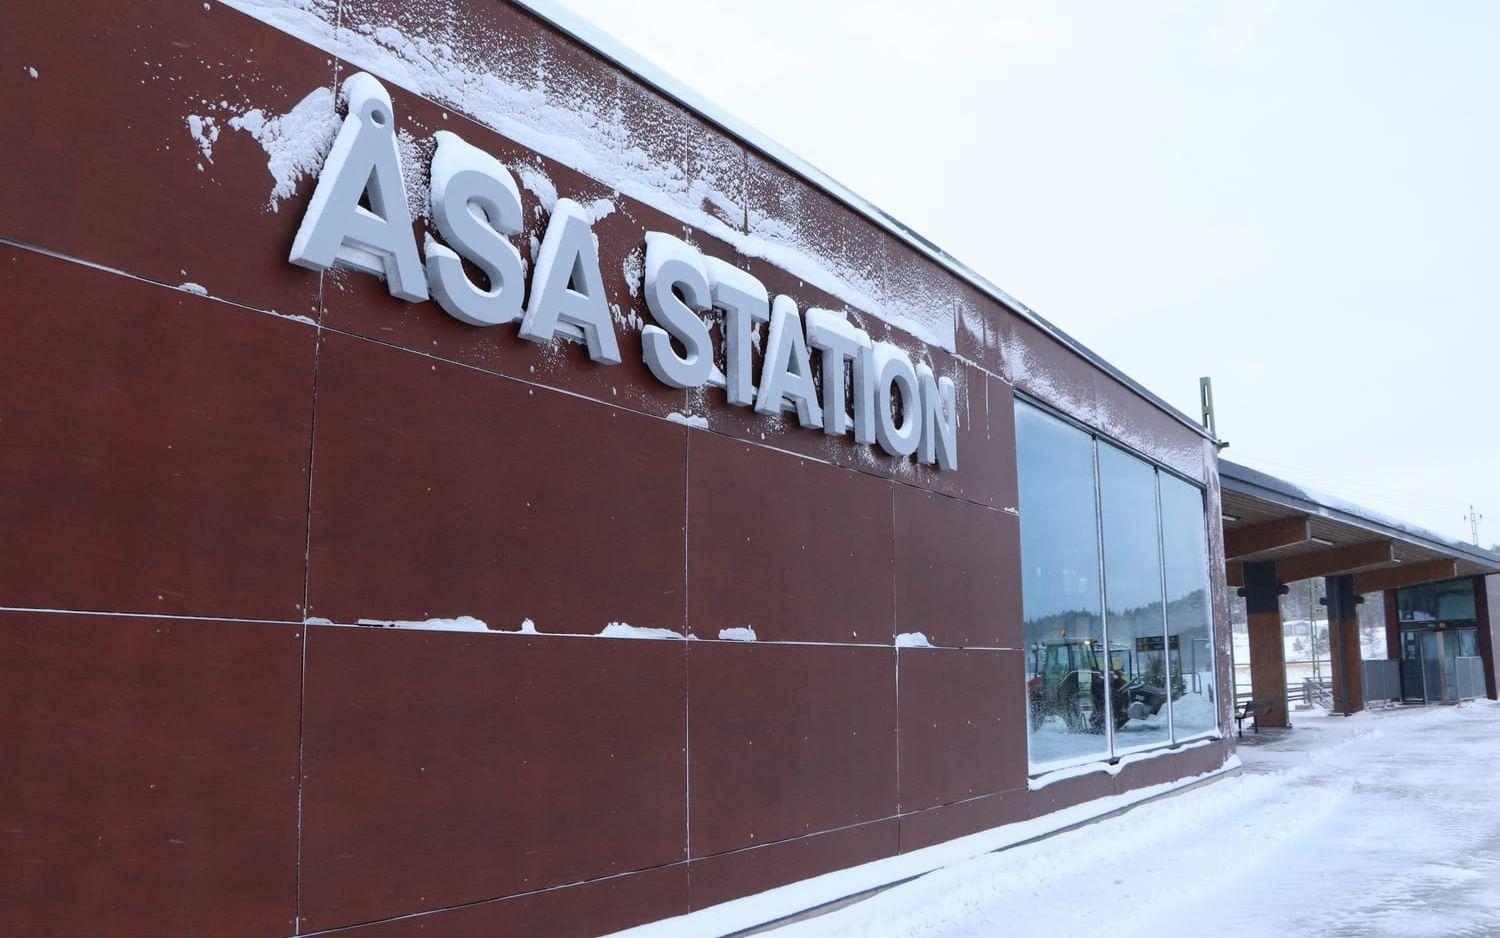 Åsa station.